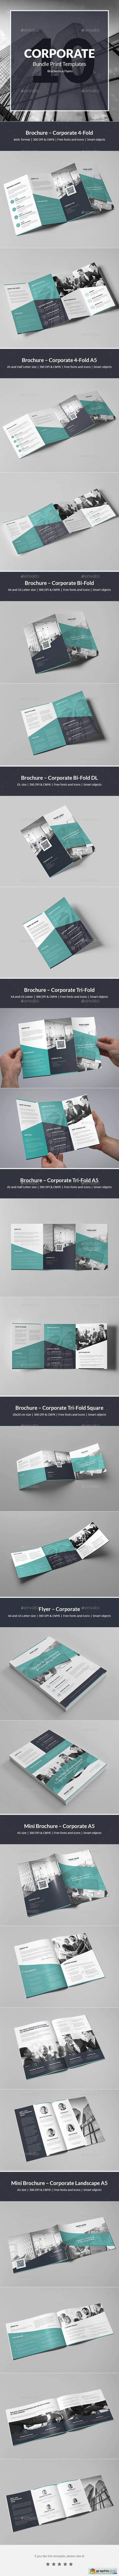 Corporate – Brochures Bundle Print Templates 10 in 1